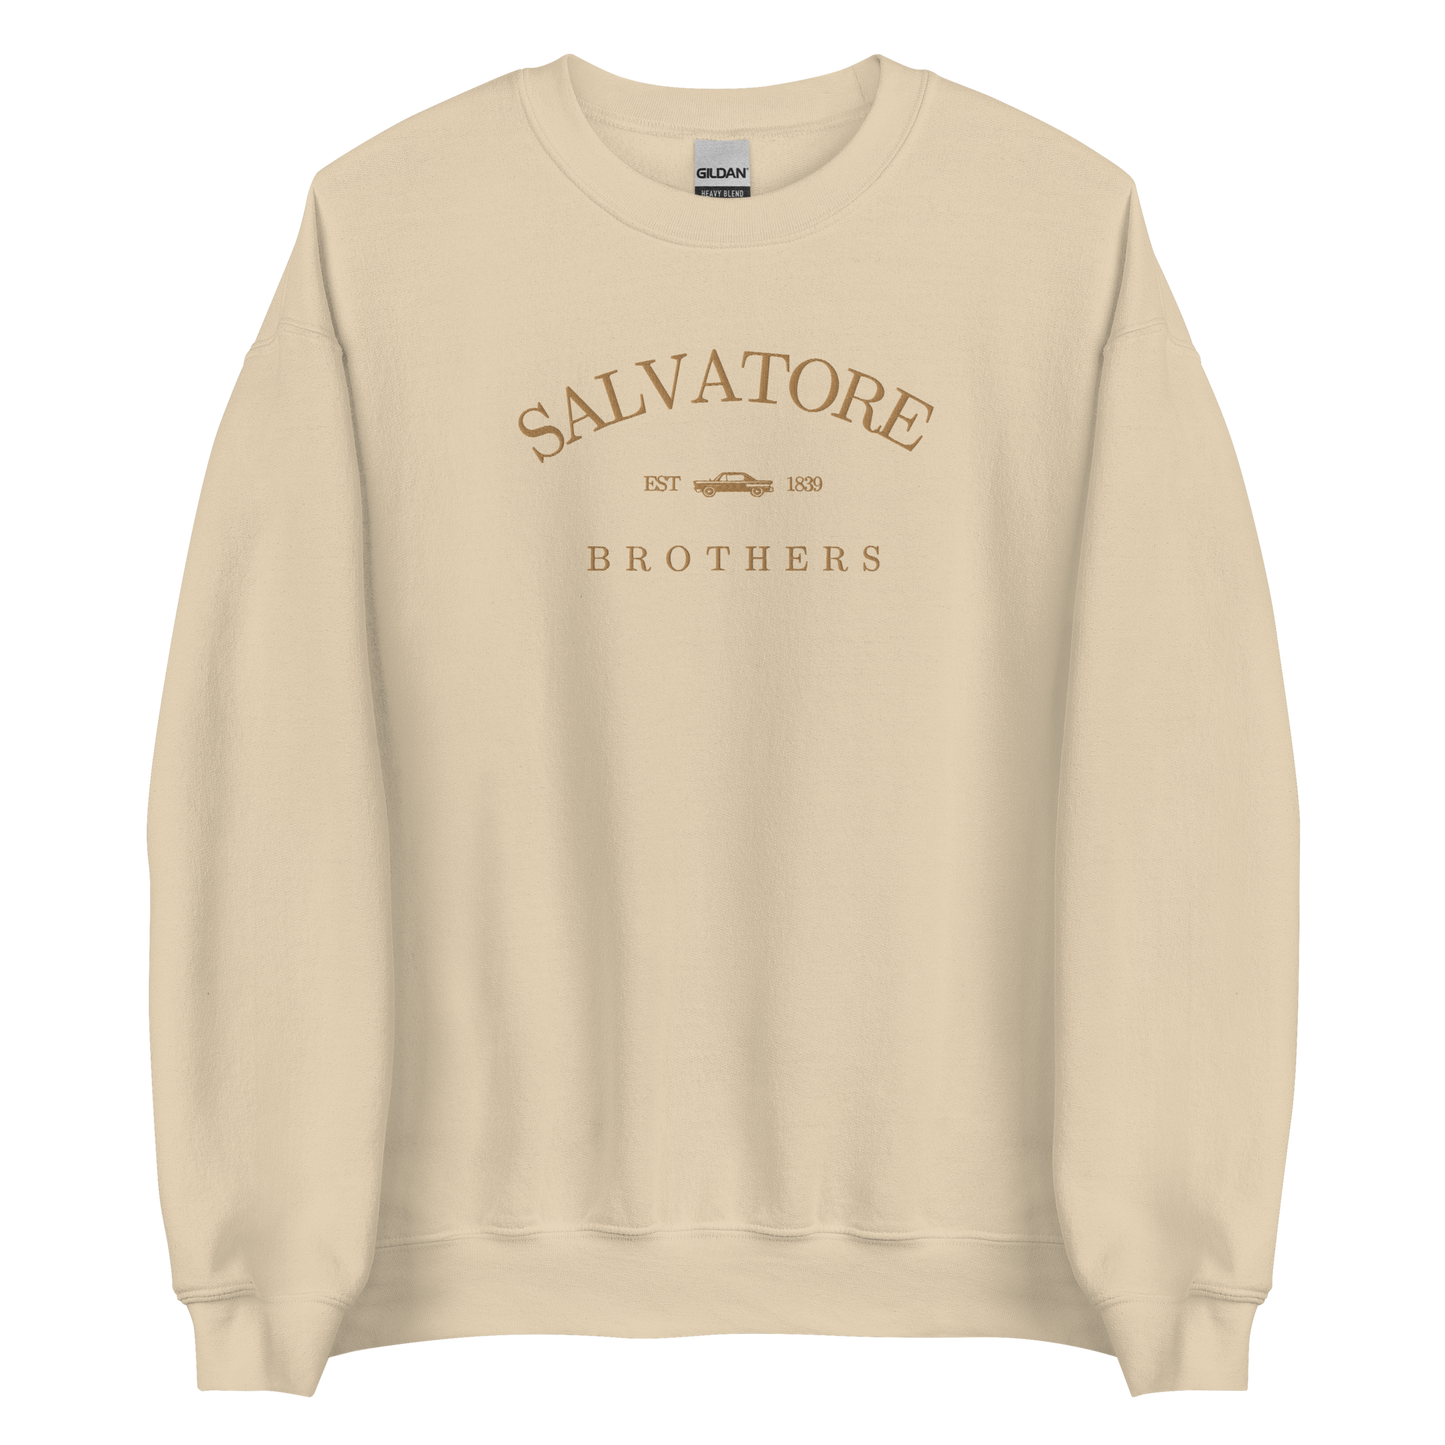 Salvatore Brothers Sweatshirt